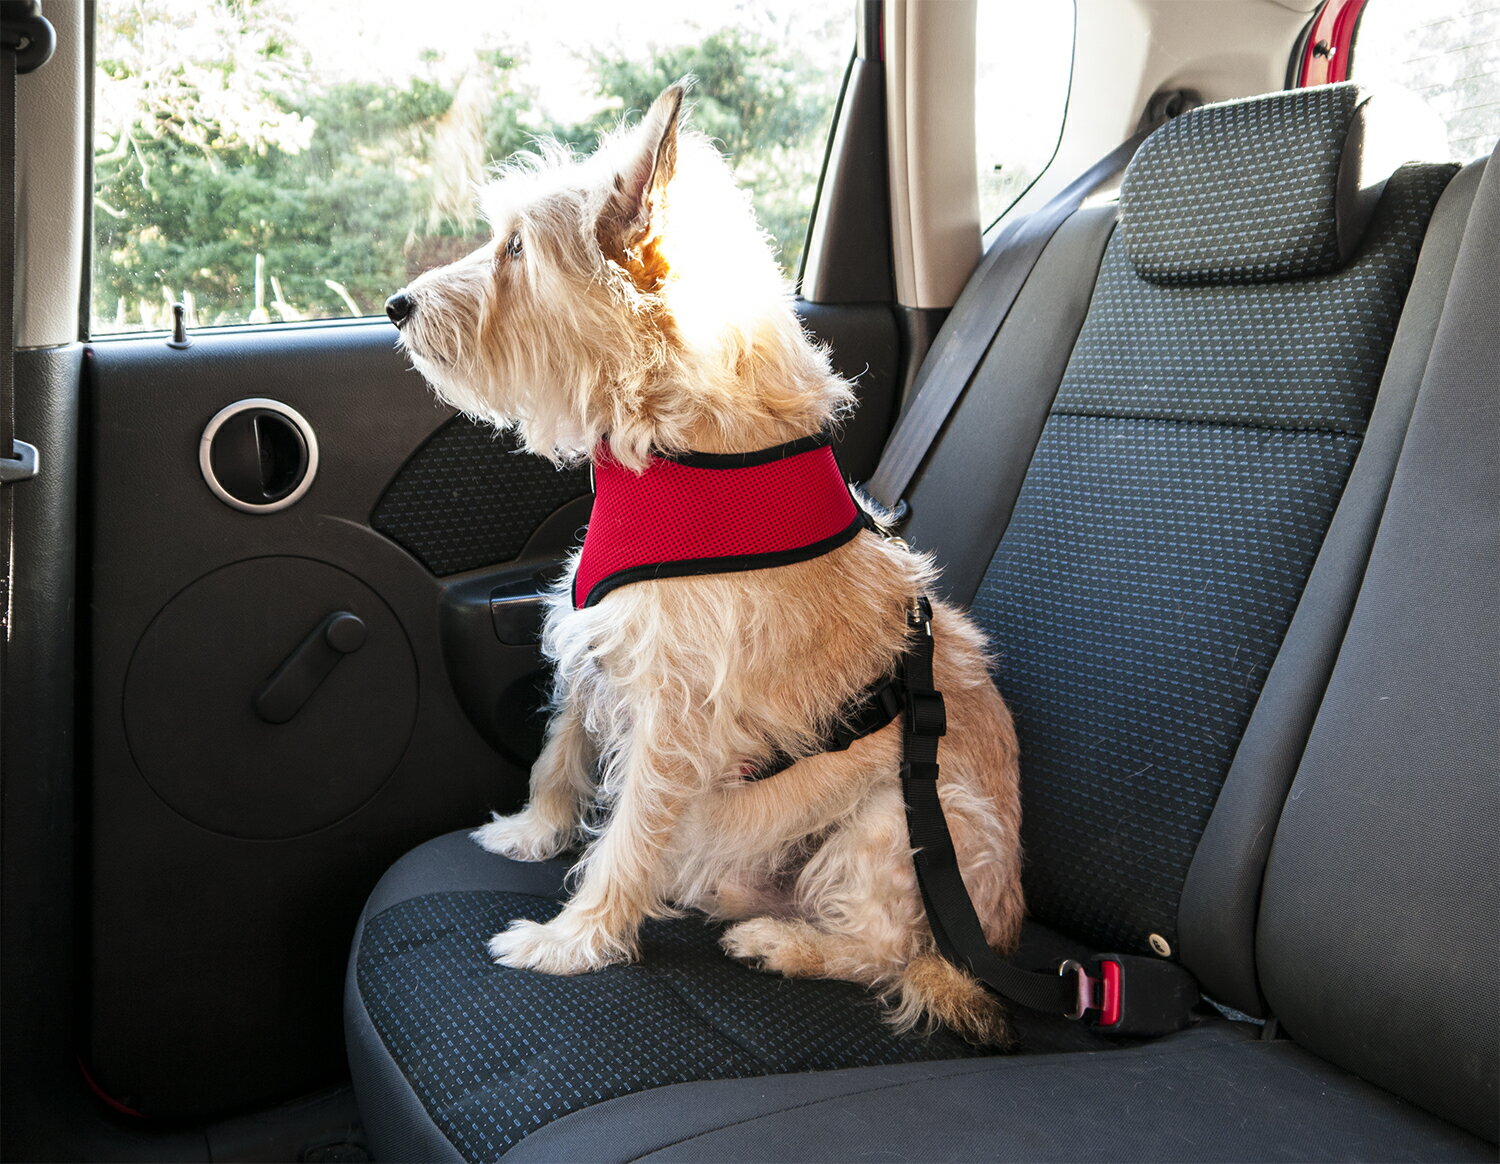 Image result for dog with seat belt images"